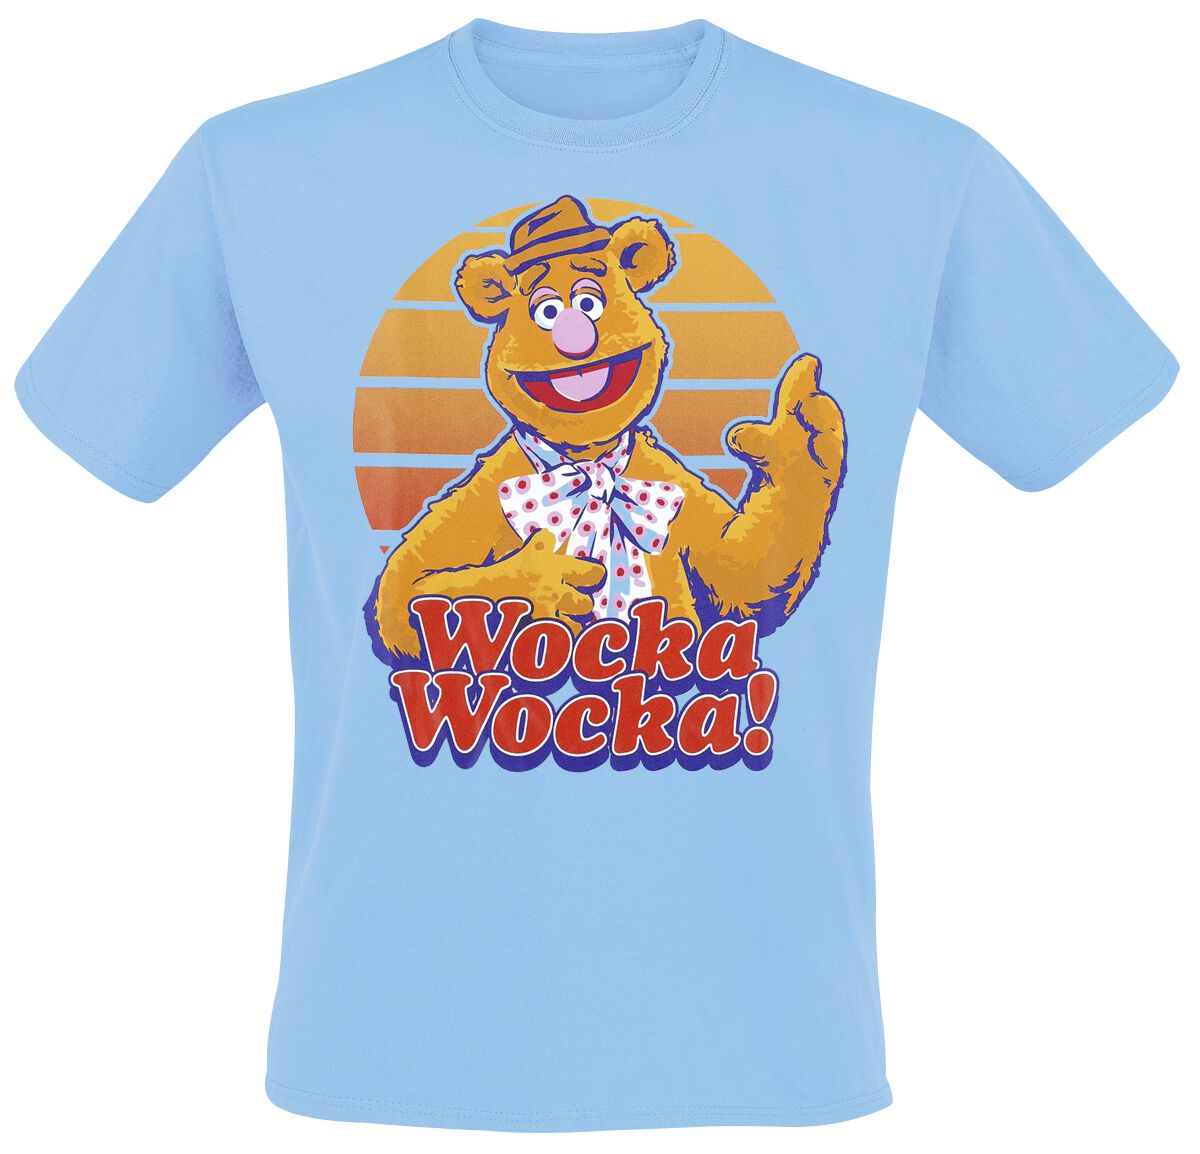 The Muppets Wocka Wocka T-Shirt blue